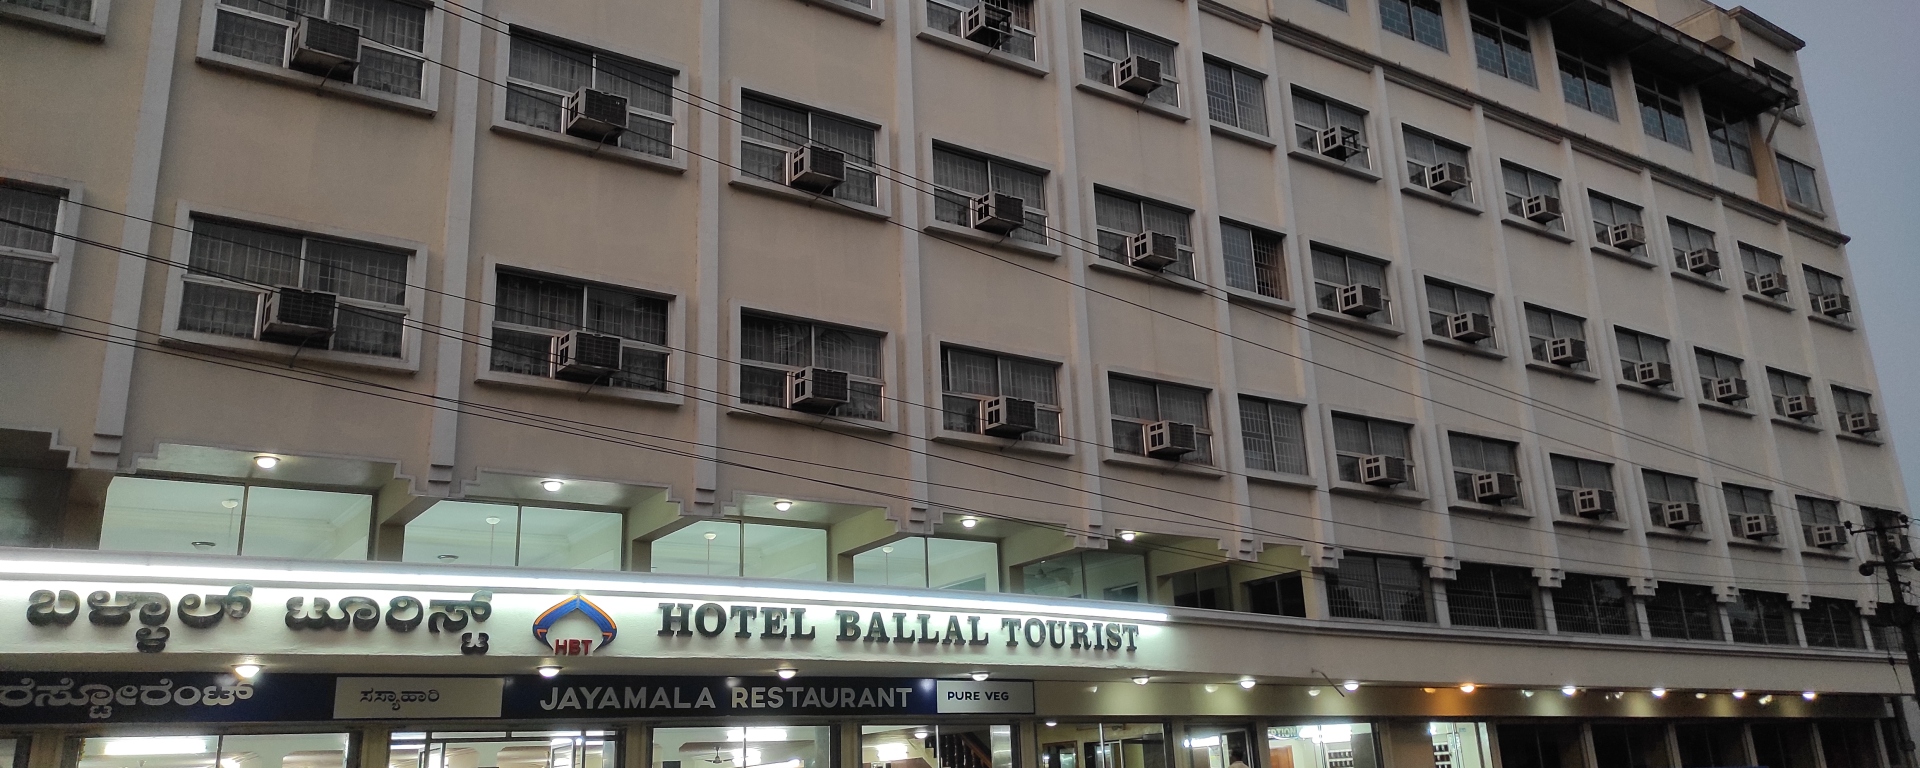 ballal tourist hotel private limited